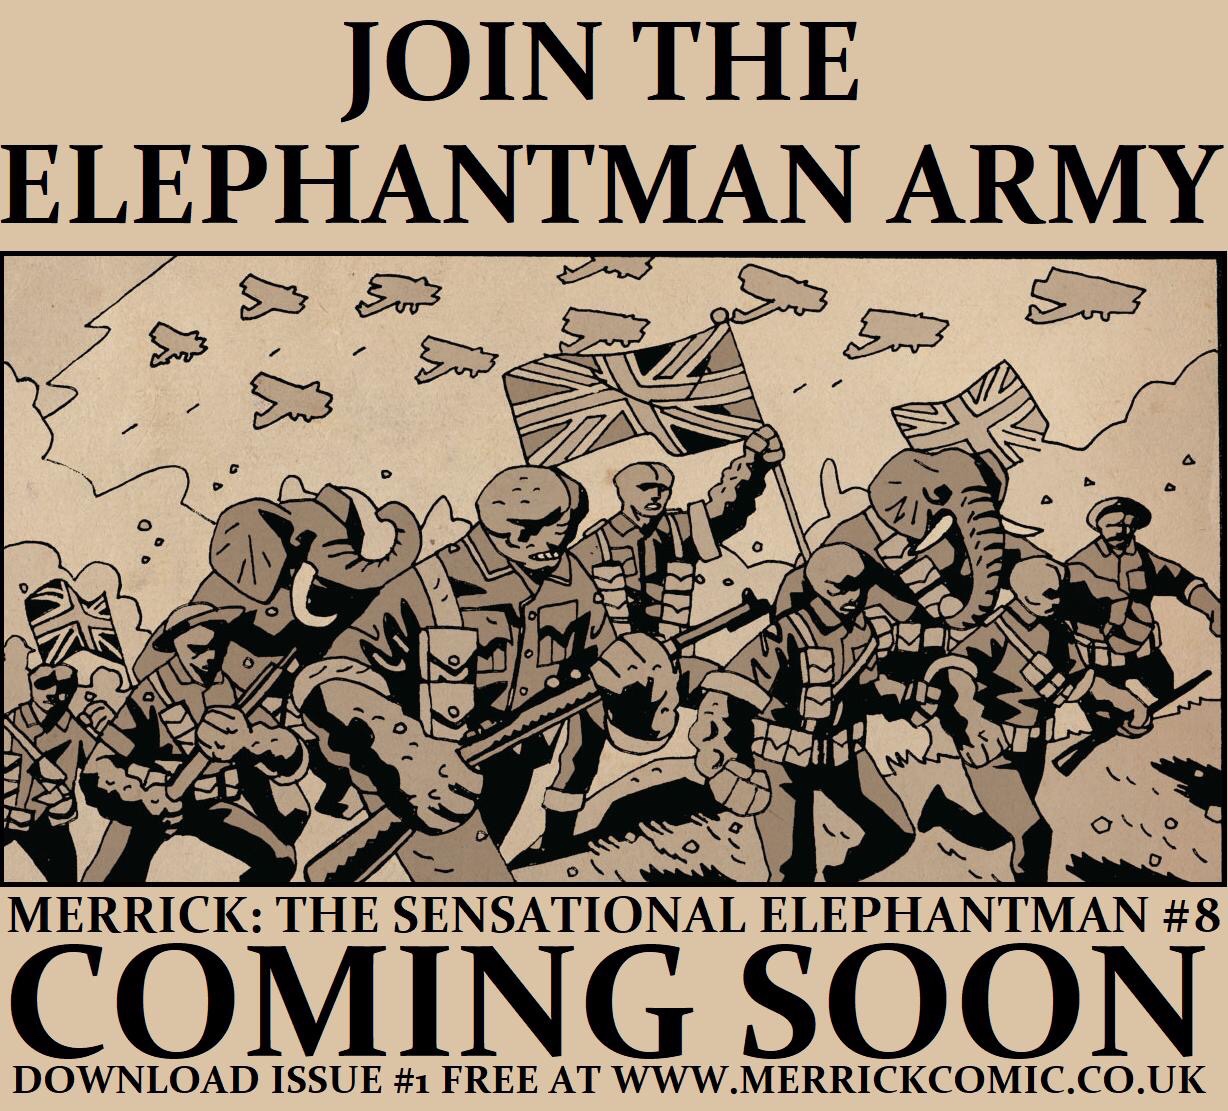 Merrick: The Sensational Elephantman Promotional Image